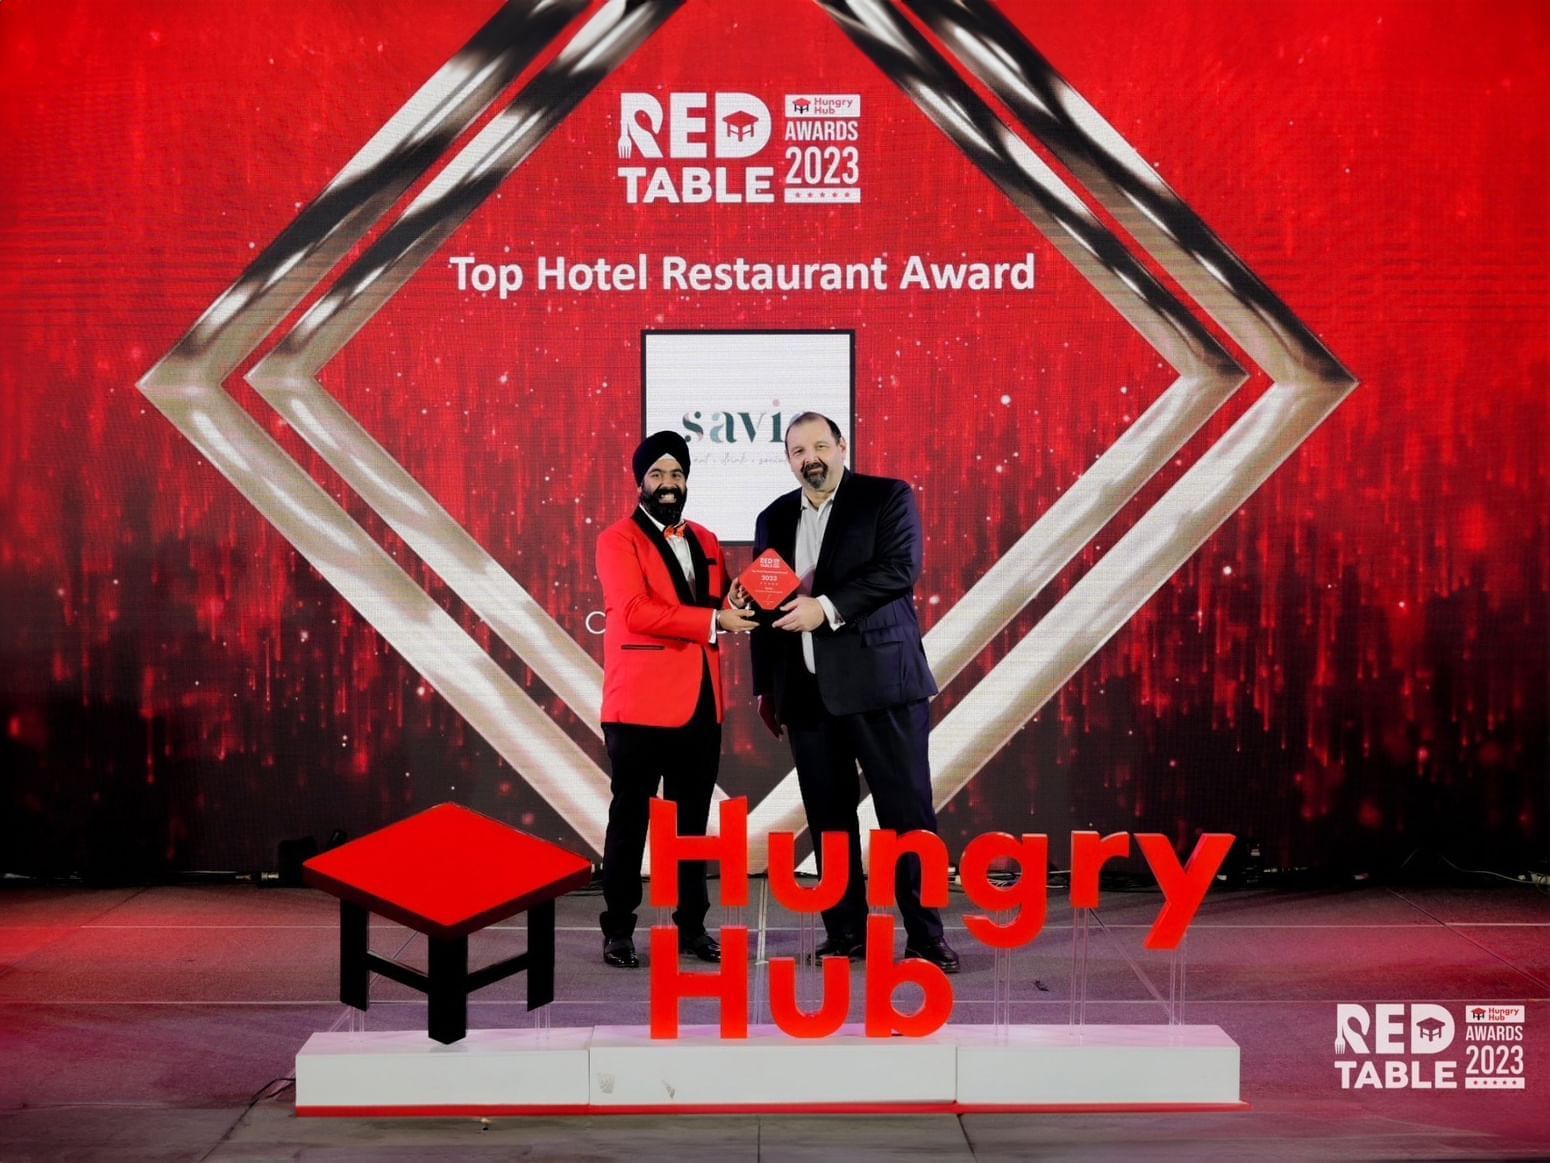 Top Hotel Restaurant  Awards  in Bangkok